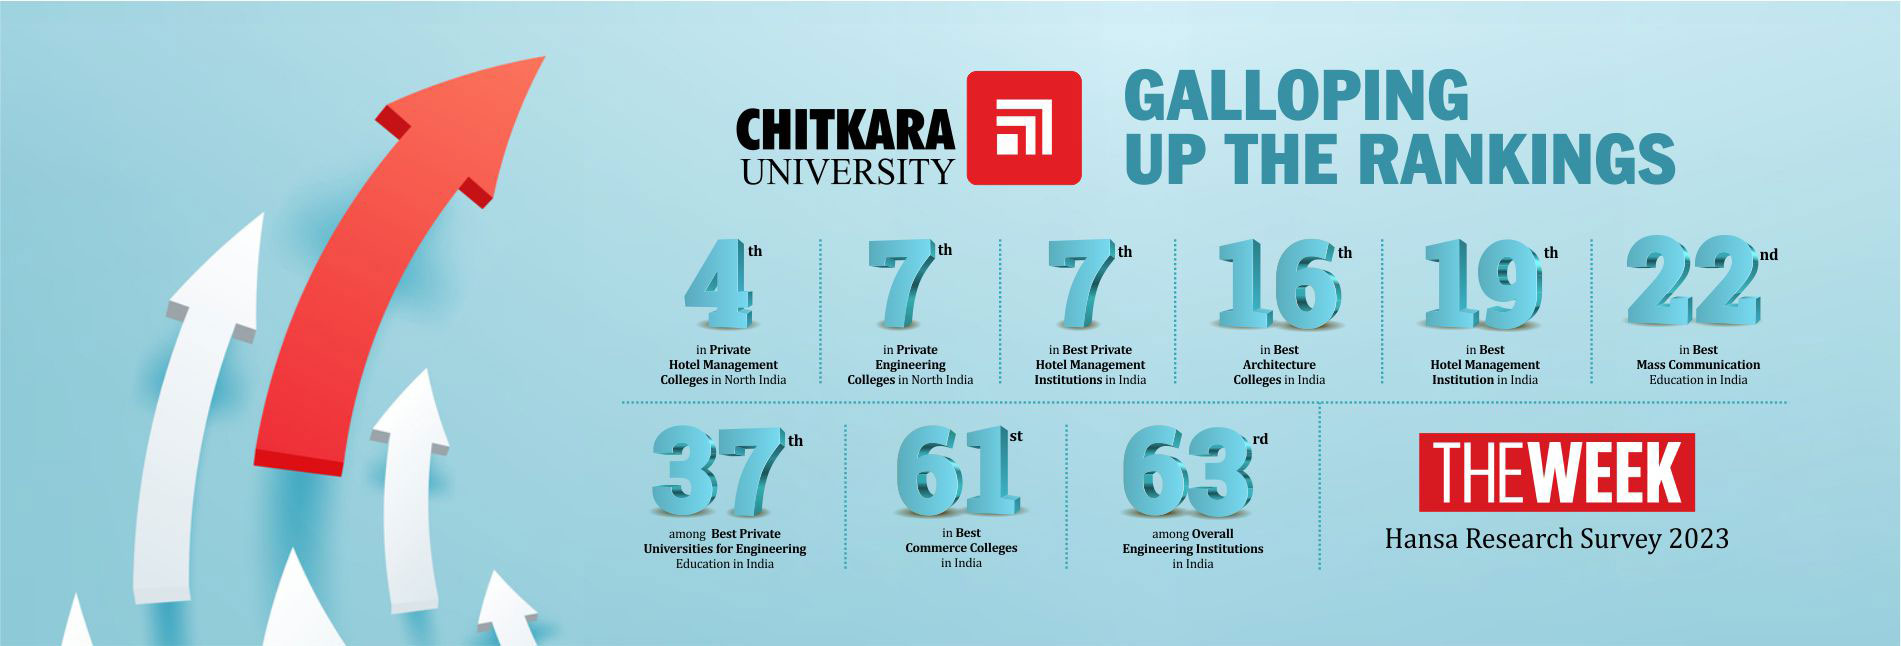 The Week Hansa Survey 2023 - Chitkara University